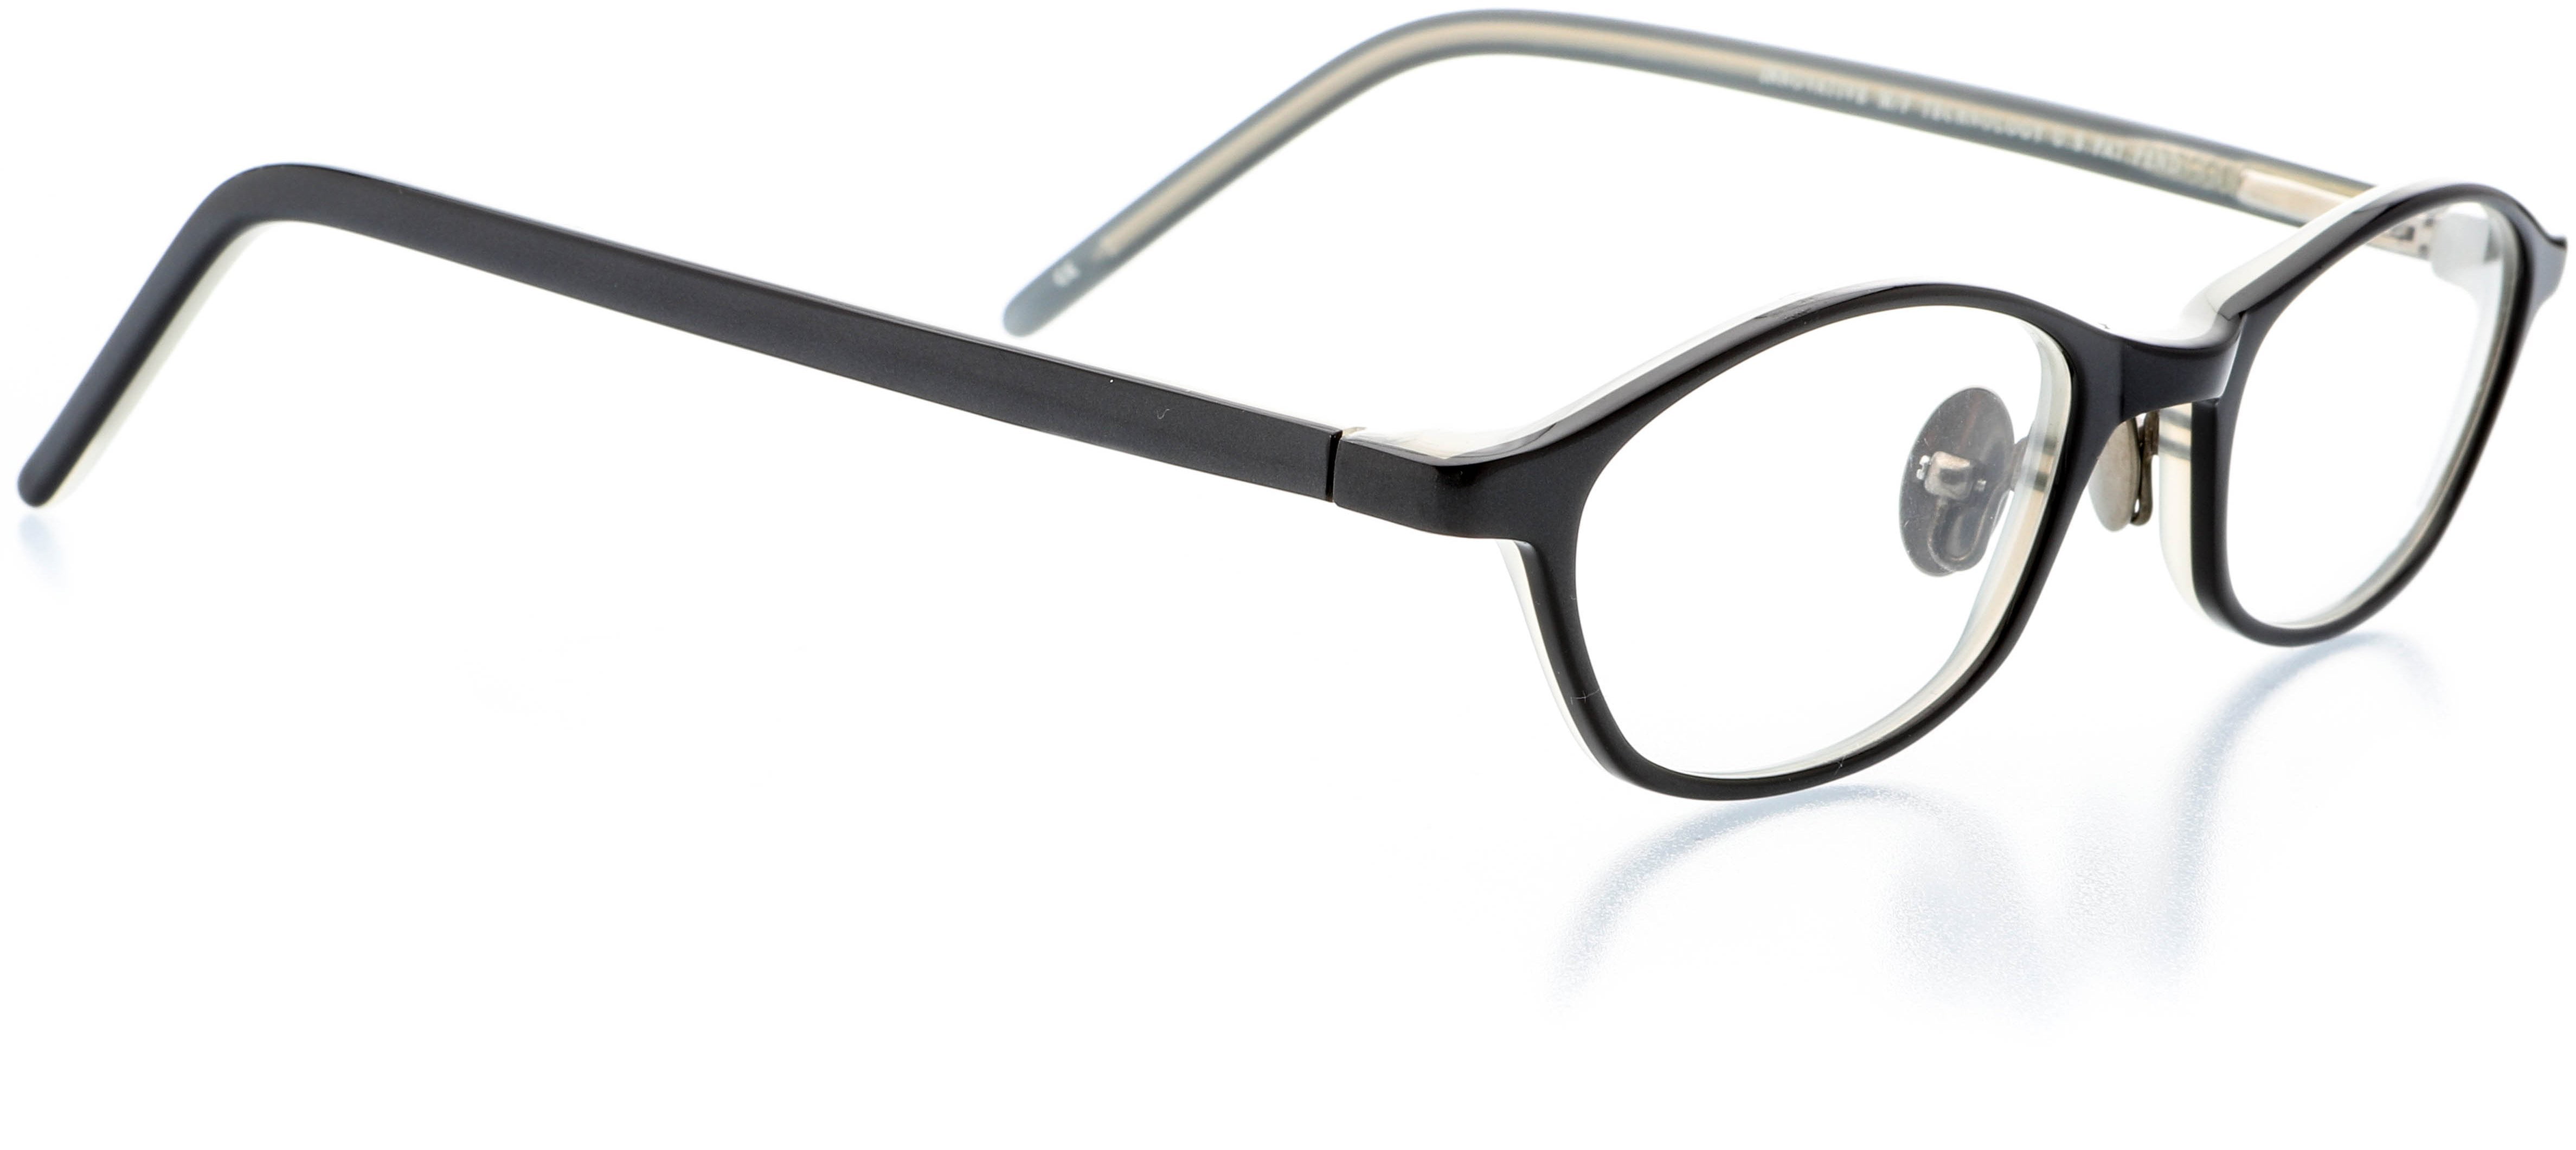 Optical Eyewear - Oval Shape, Plastic Full Rim Frame